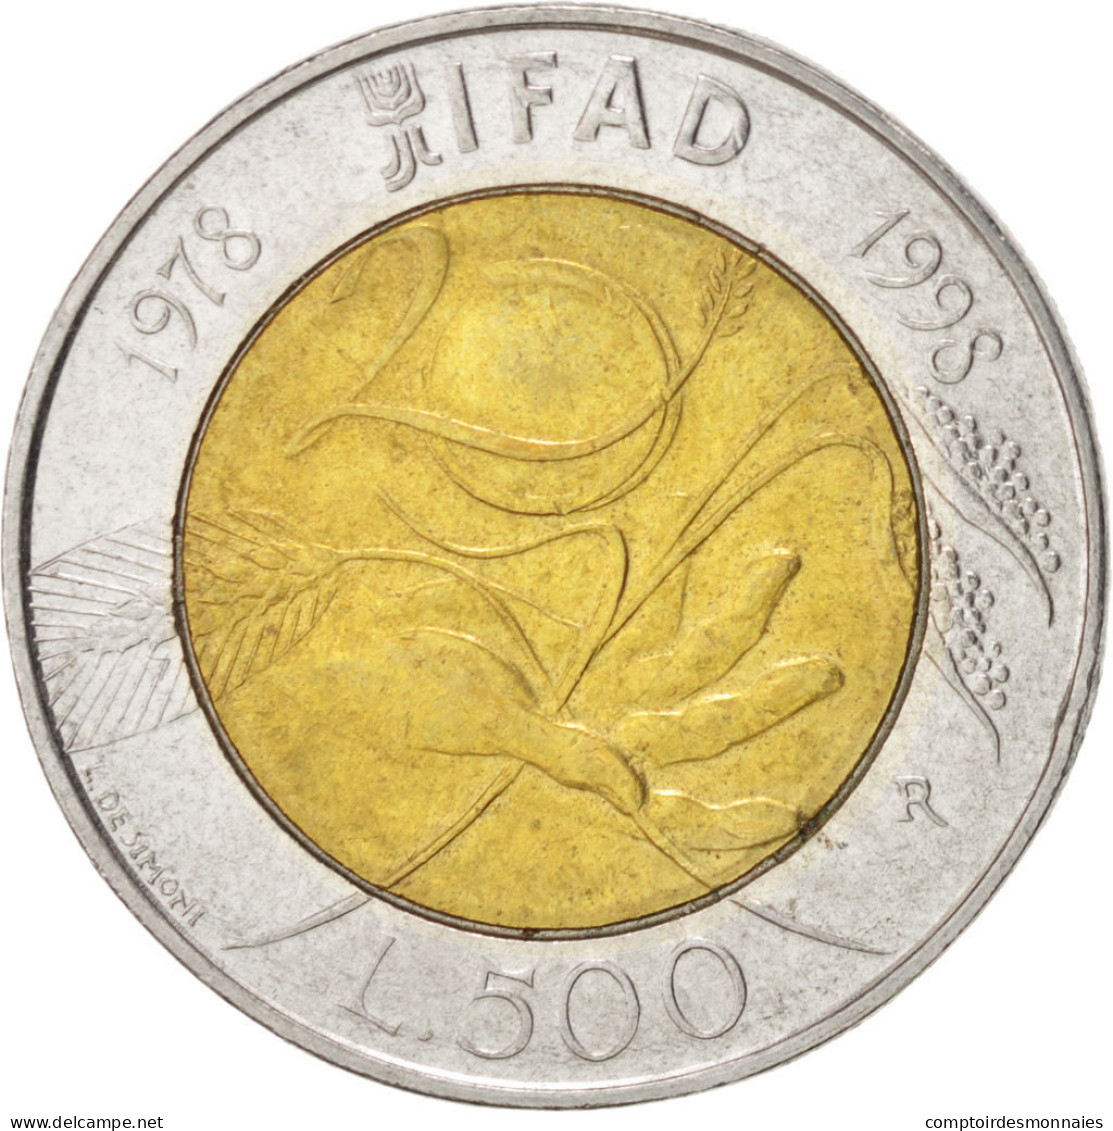 Monnaie, Italie, 500 Lire, 1998, SUP, Bi-Metallic, KM:193 - 500 Lire